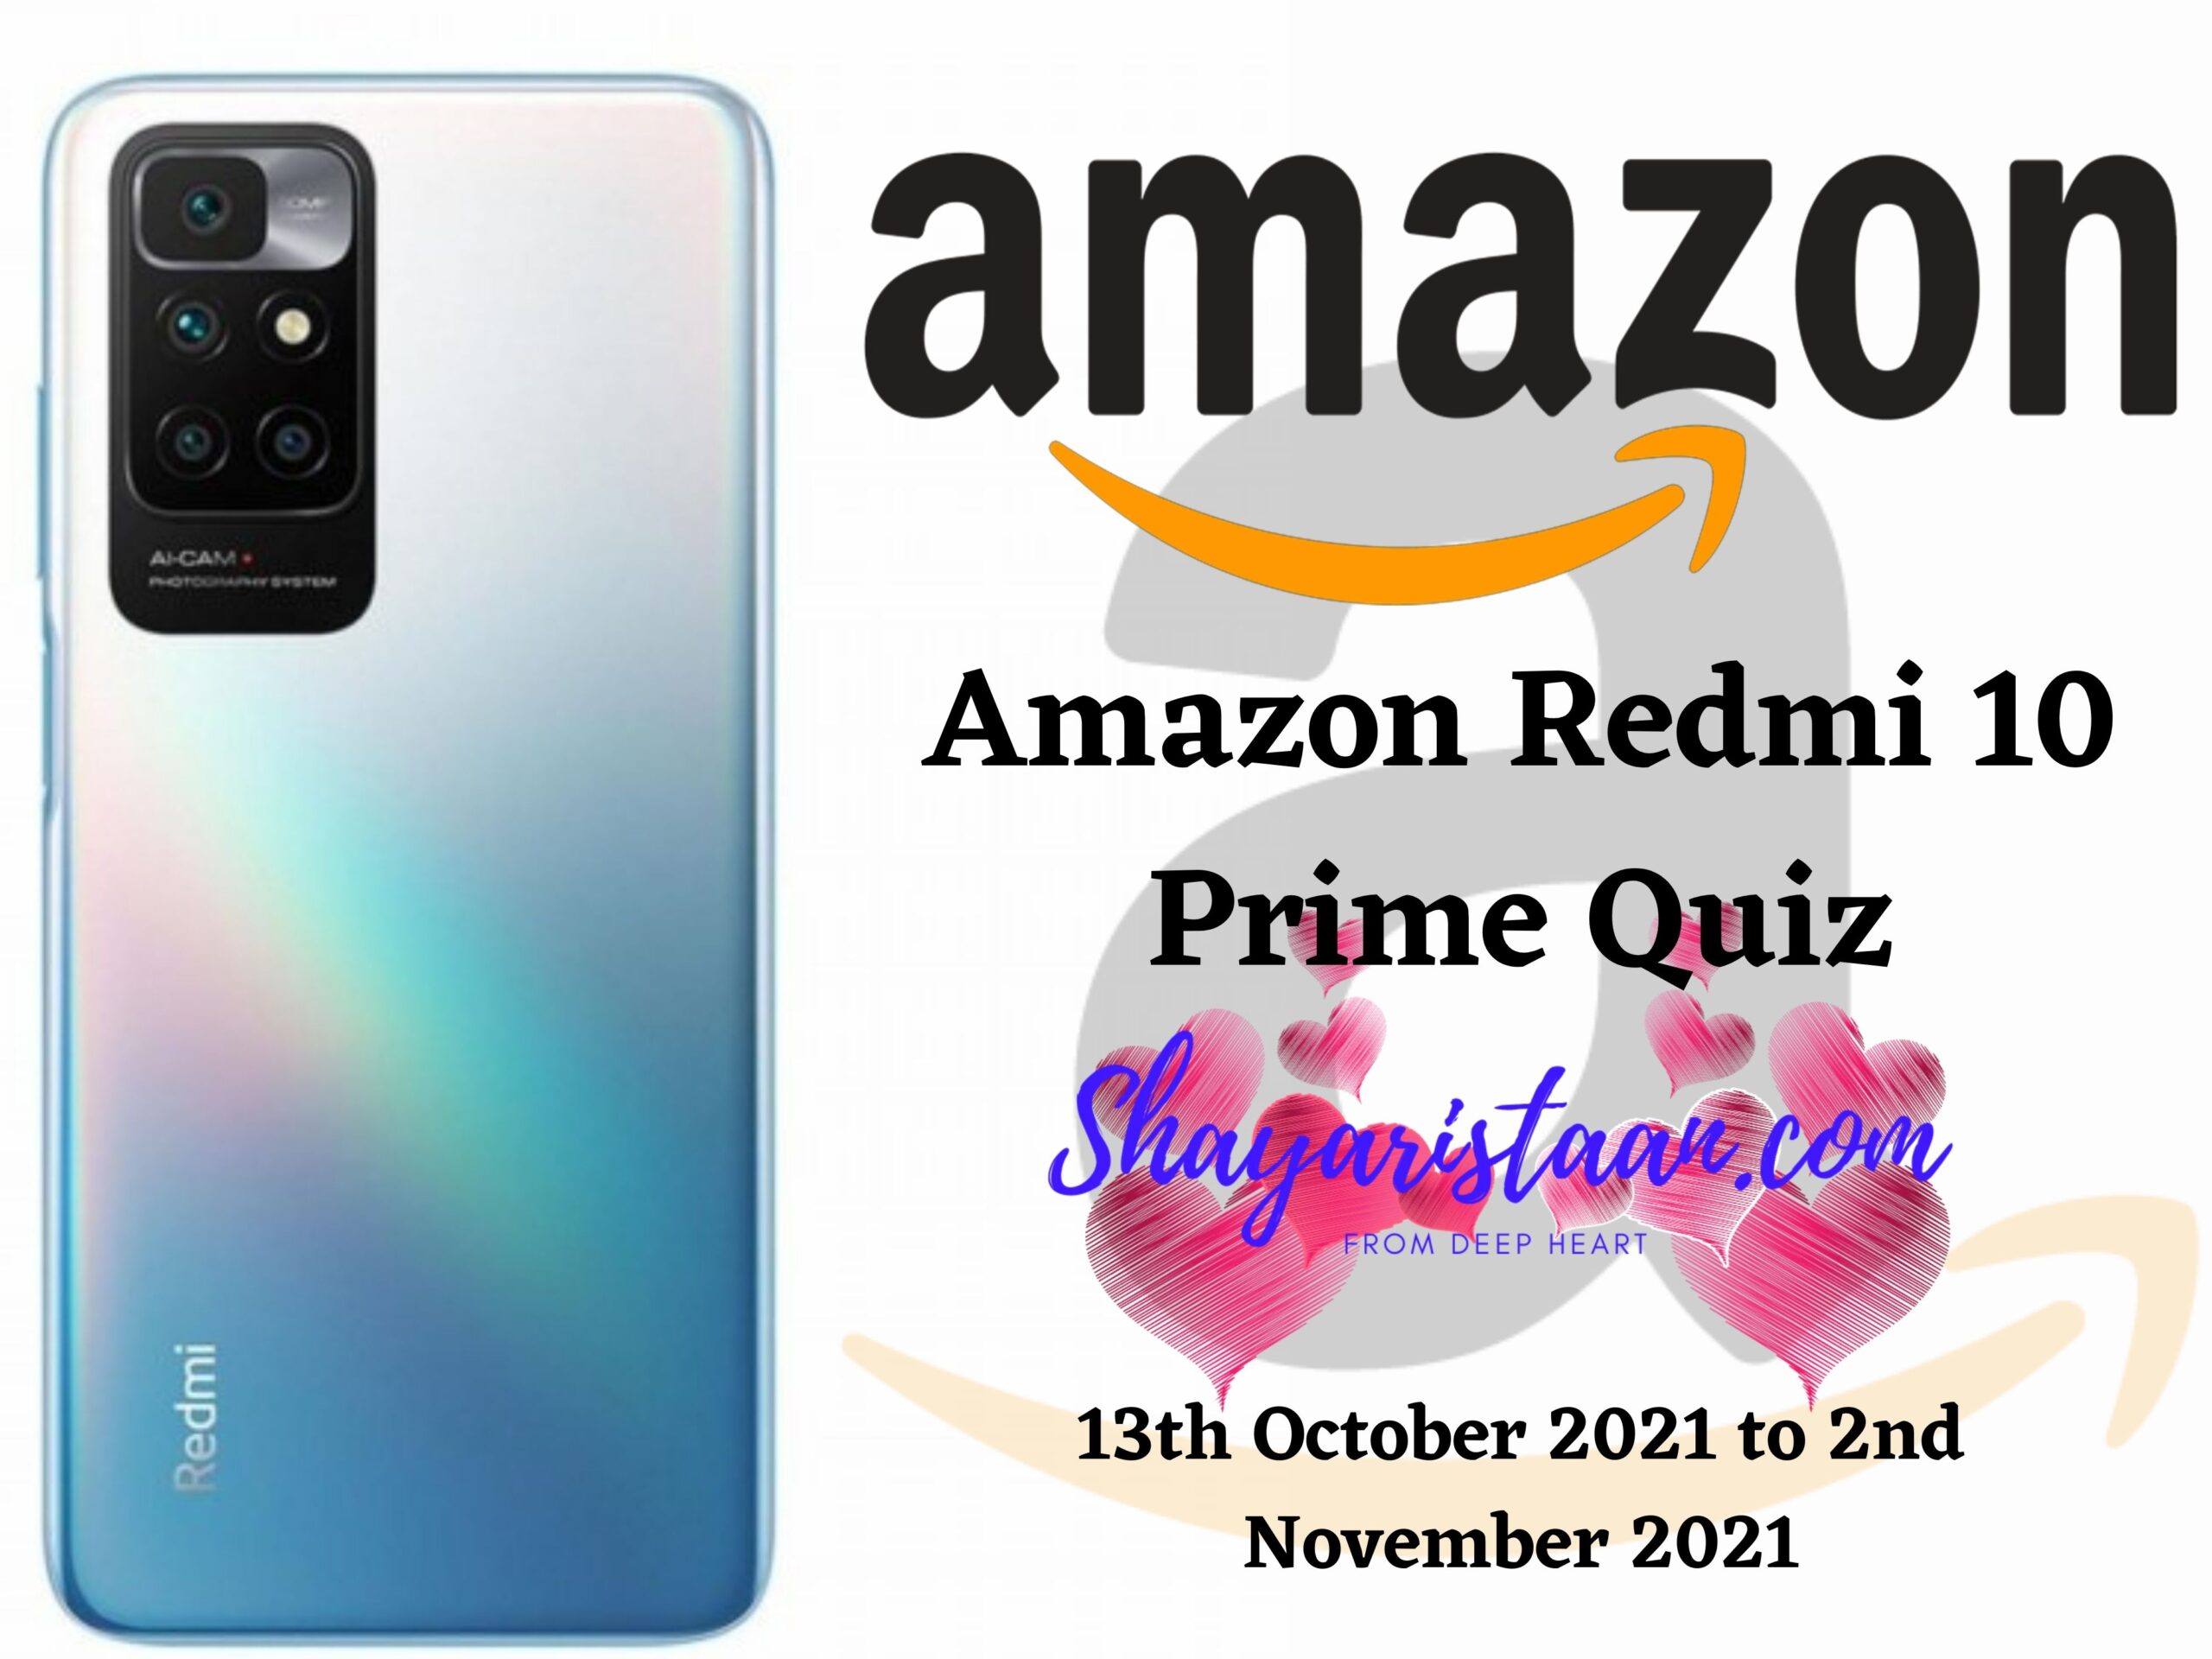 Amazon Redmi 10 Prime Quiz